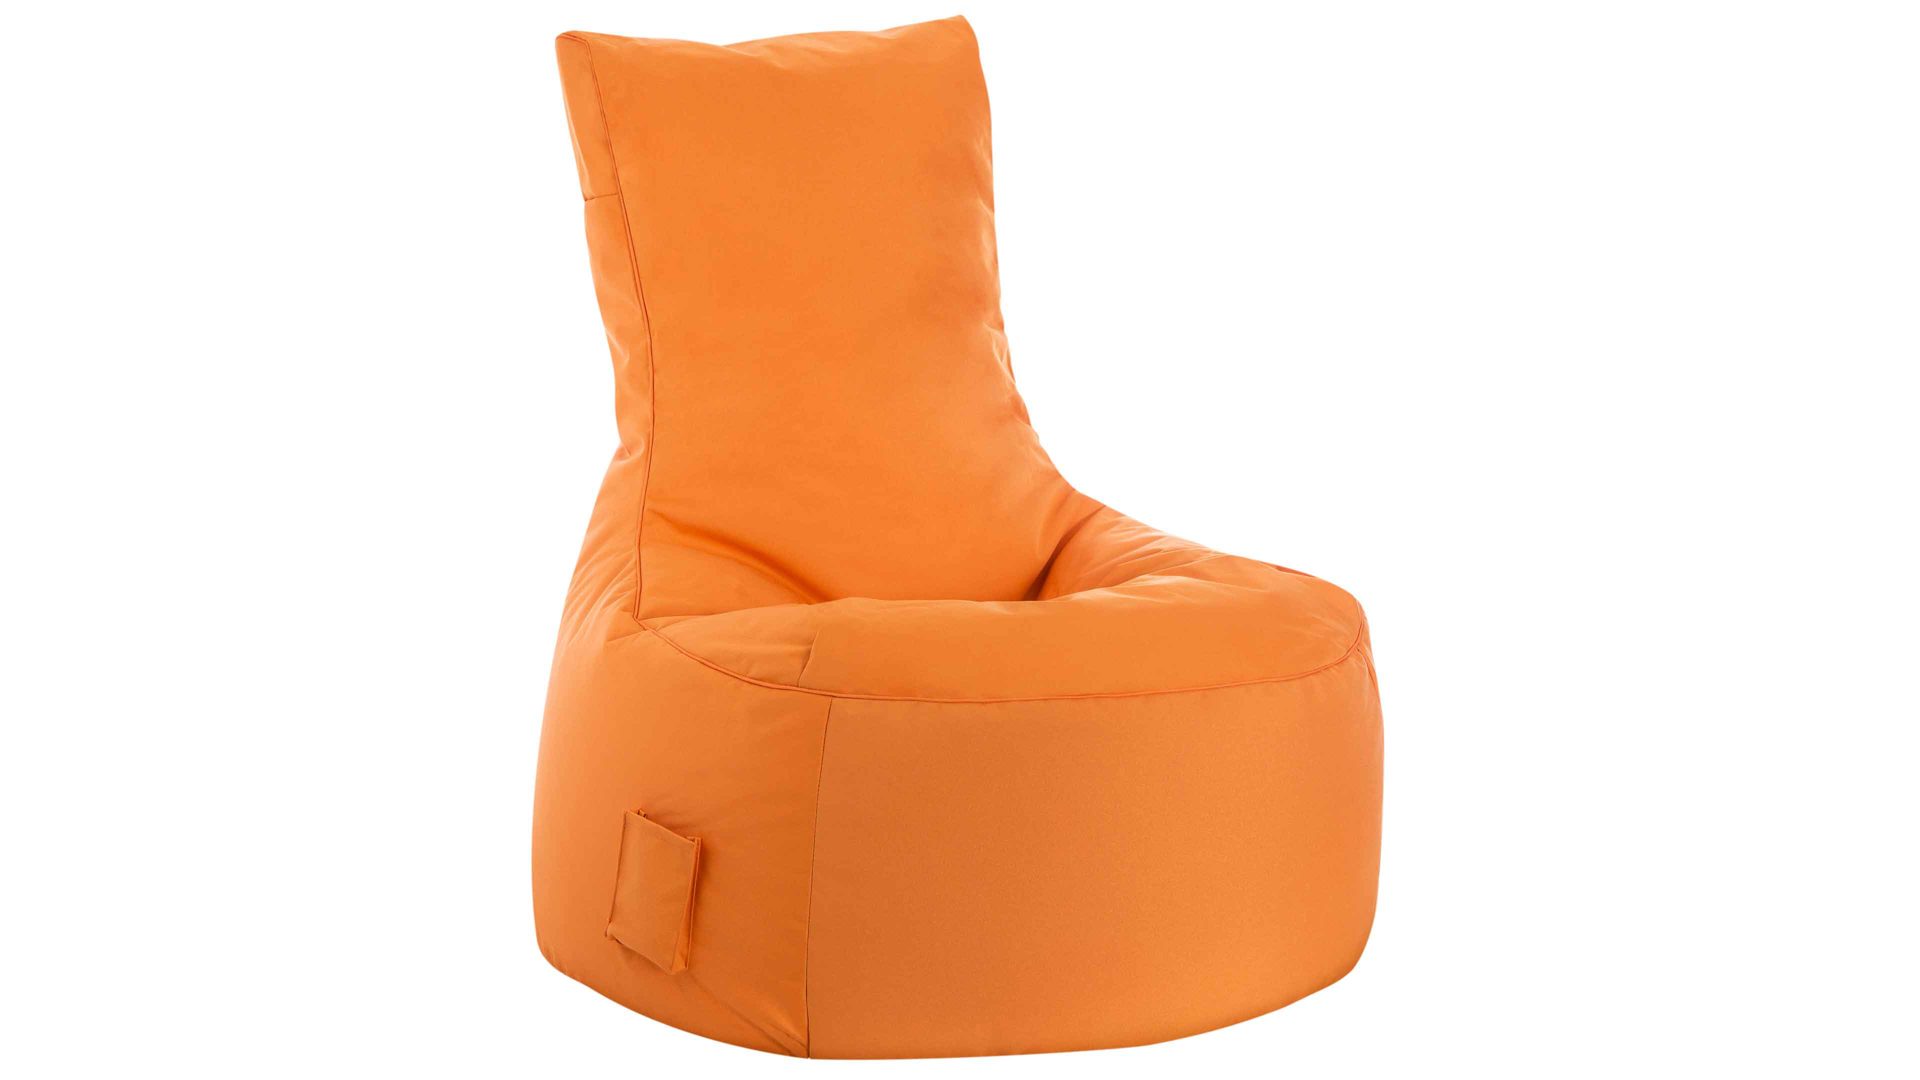 Sitzsack-Sessel Magma sitting point aus Kunstfaser in Orange SITTING POINT Sitzsack-Sessel swing scuba® als originelles Sitzmöbel orange Kunstfaser - ca. 95 x 90 x 65 cm